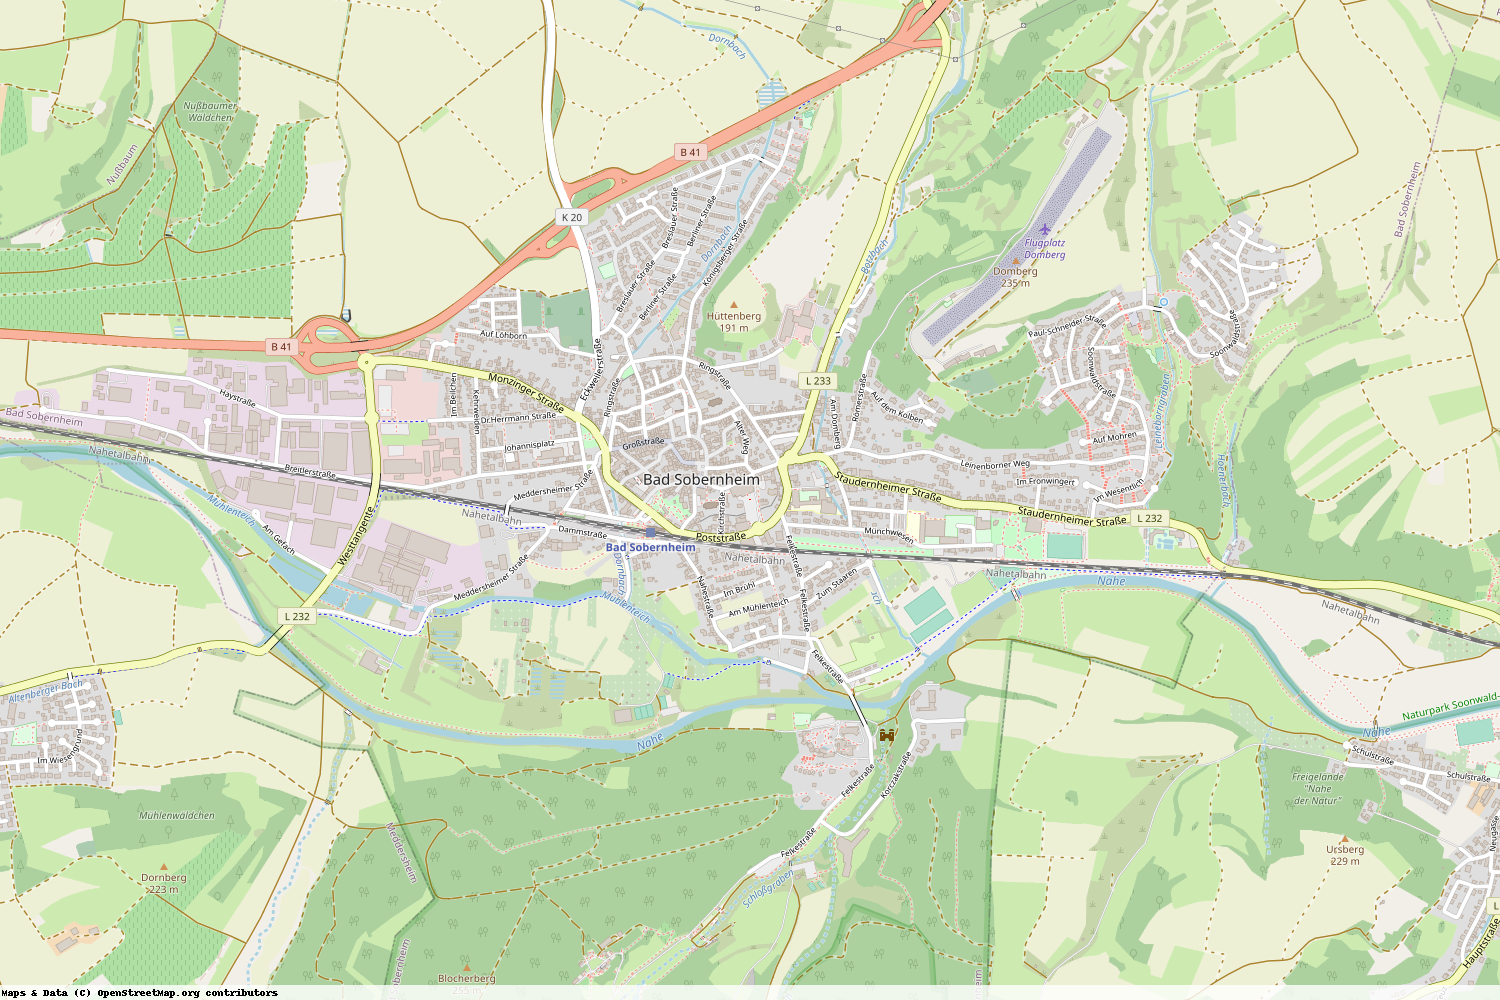 Ist gerade Stromausfall in Rheinland-Pfalz - Bad Kreuznach - Bad Sobernheim?